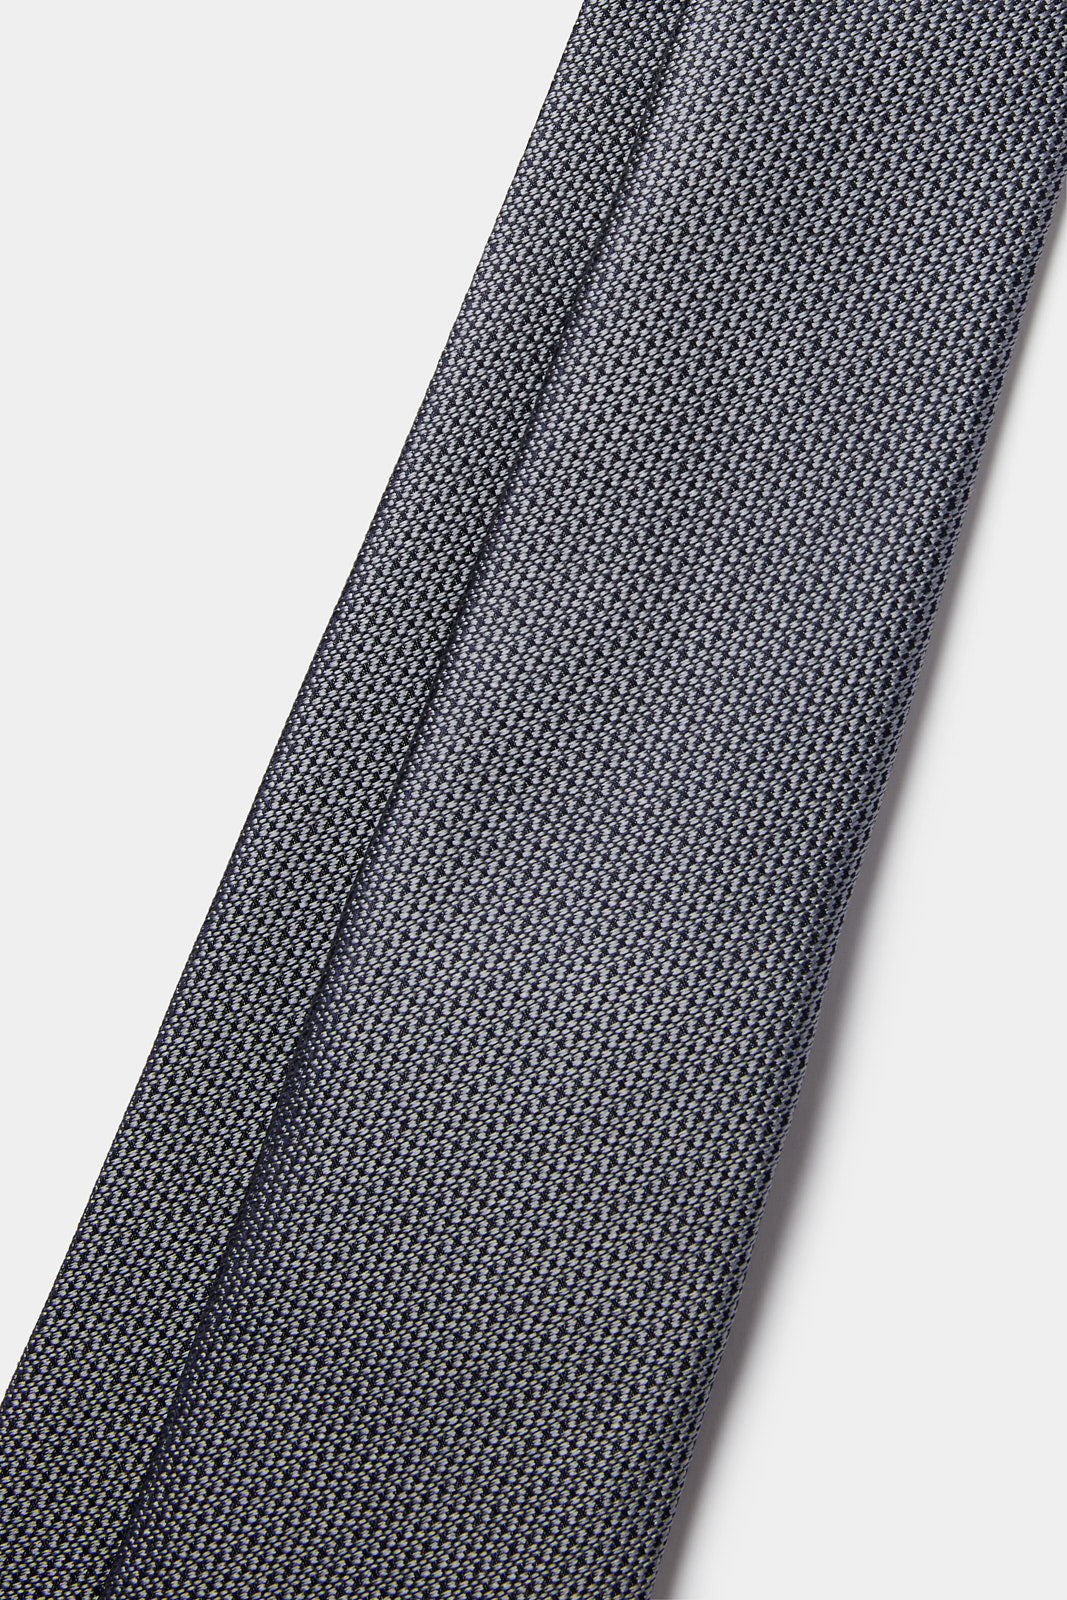 Silk Grenadine Tie in Navy Blue